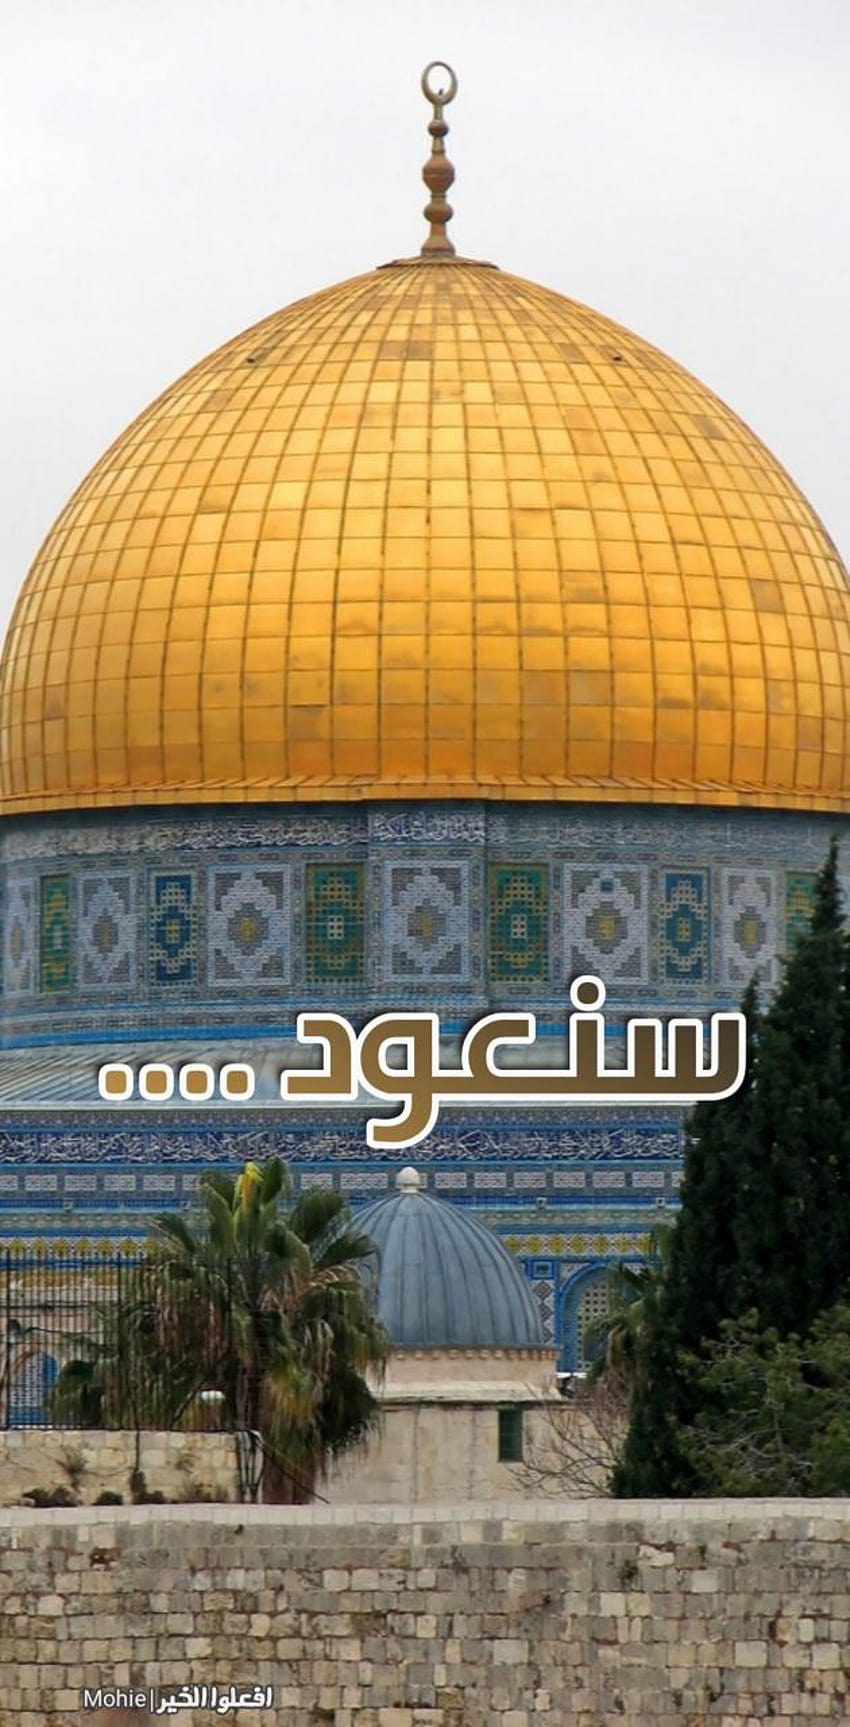 Al-Quds de Mohie214 fondo de pantalla del teléfono